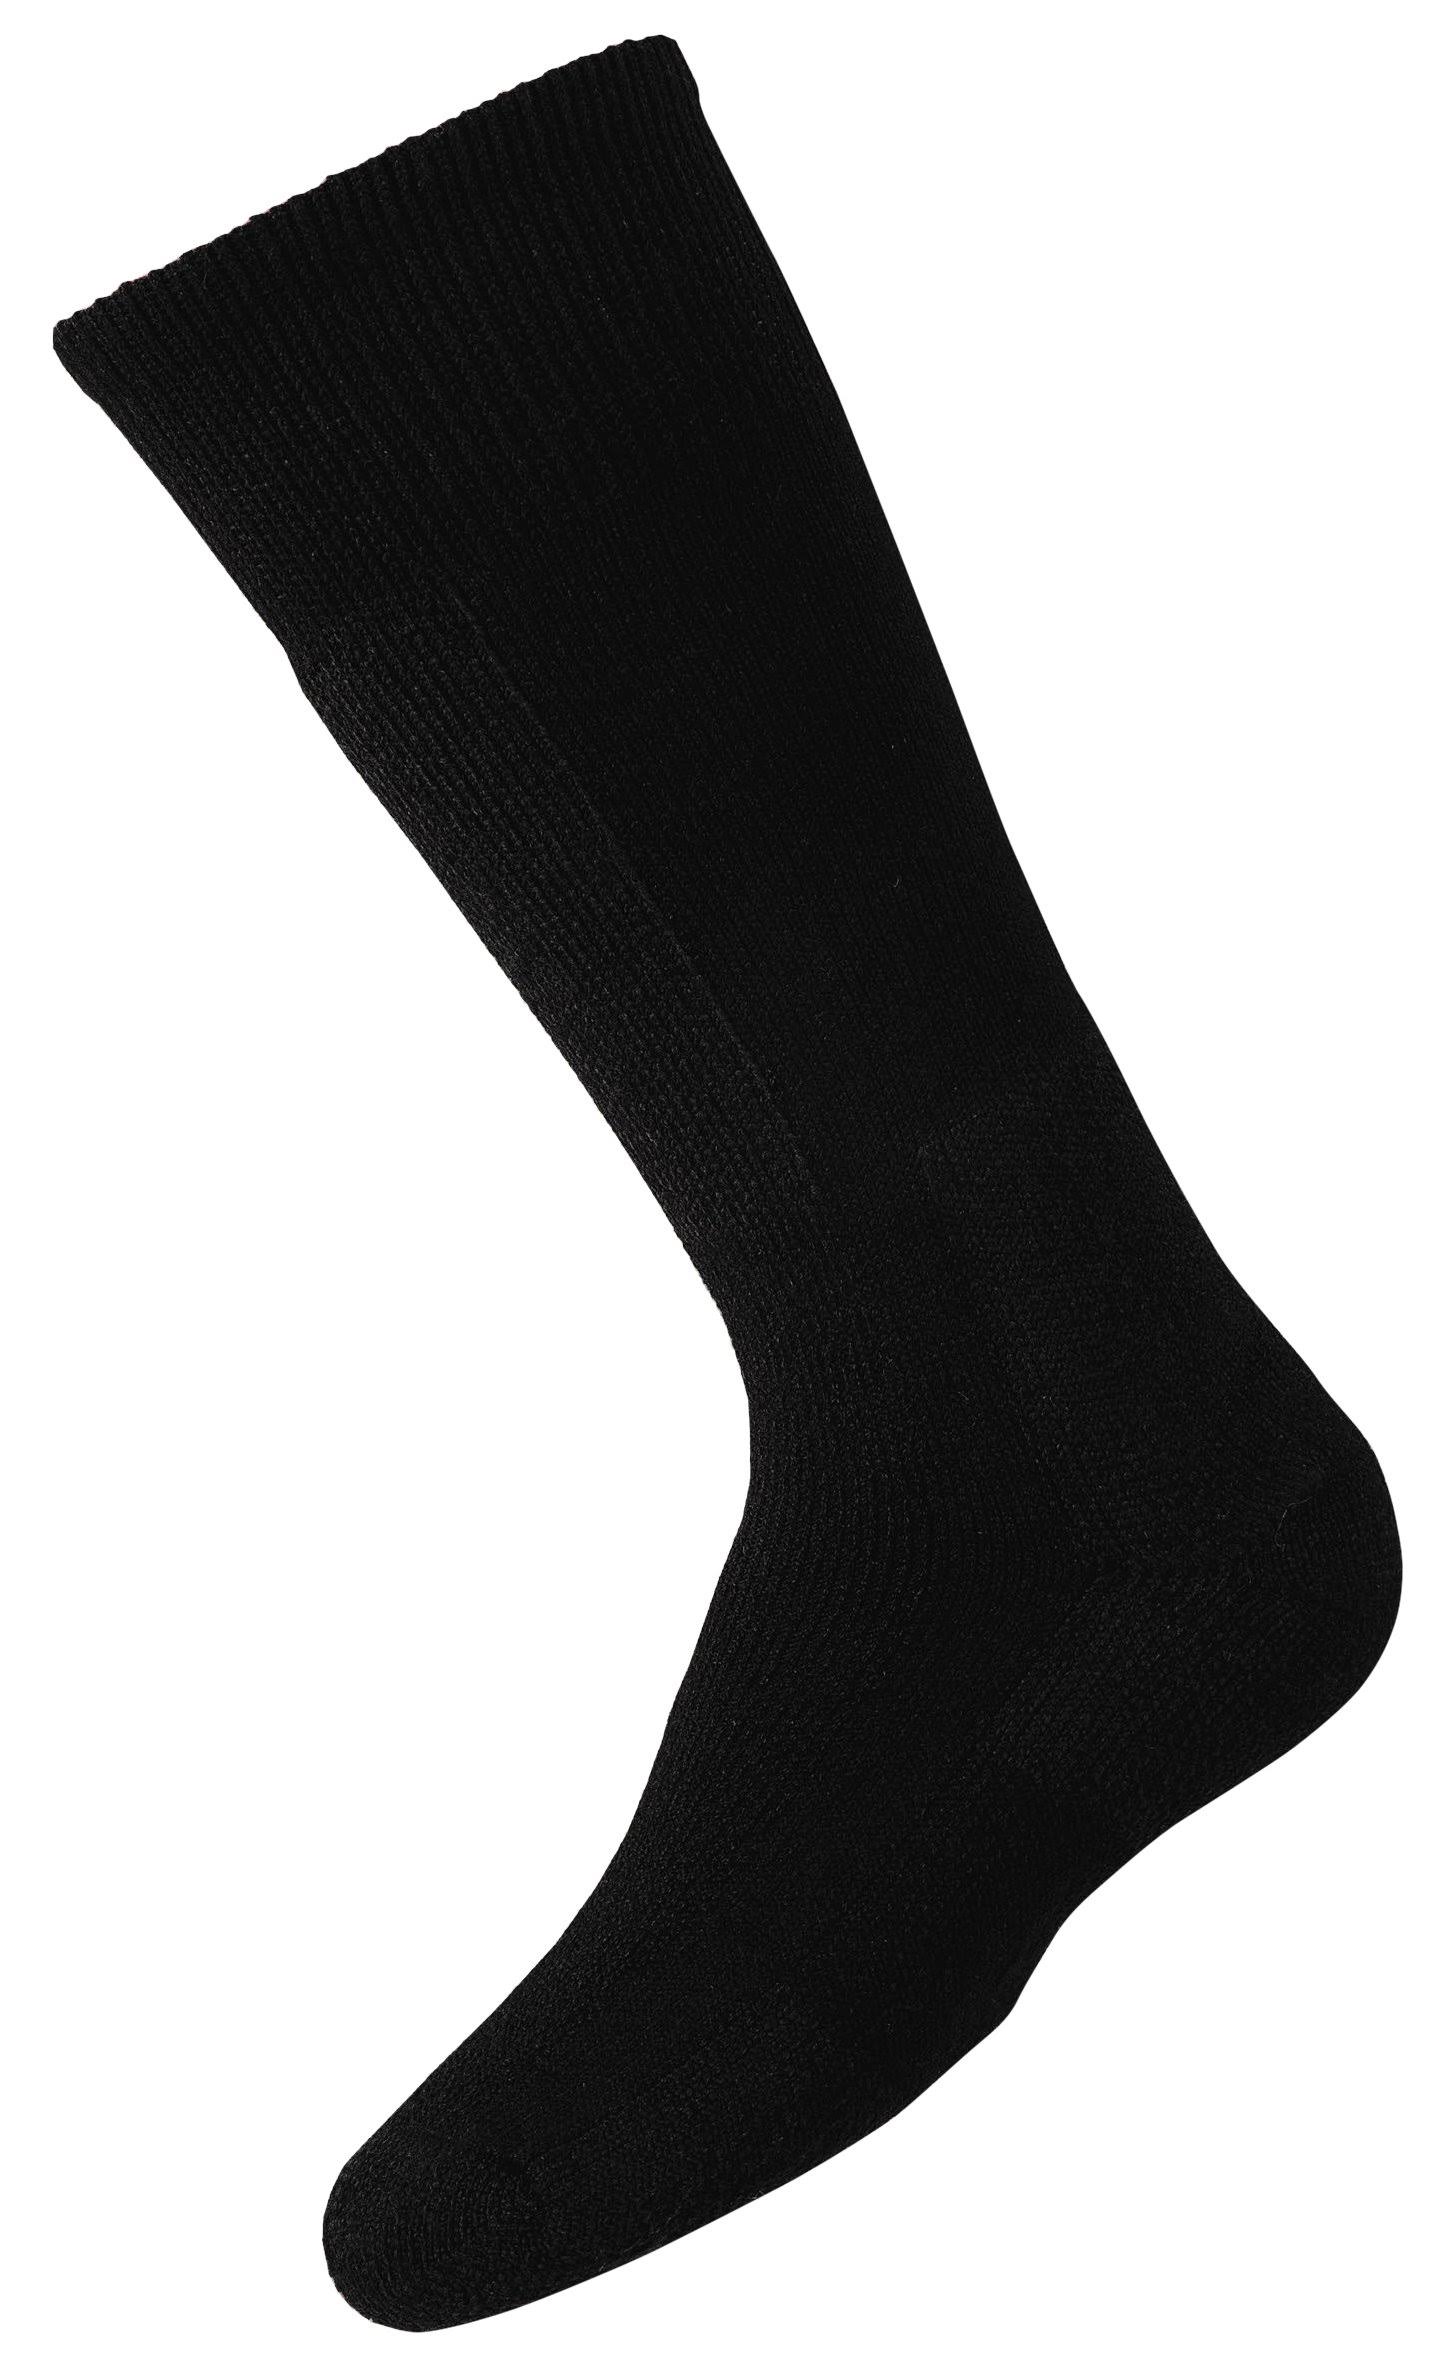 Thorlo Junior Snow Socks - Black - 3.5-5